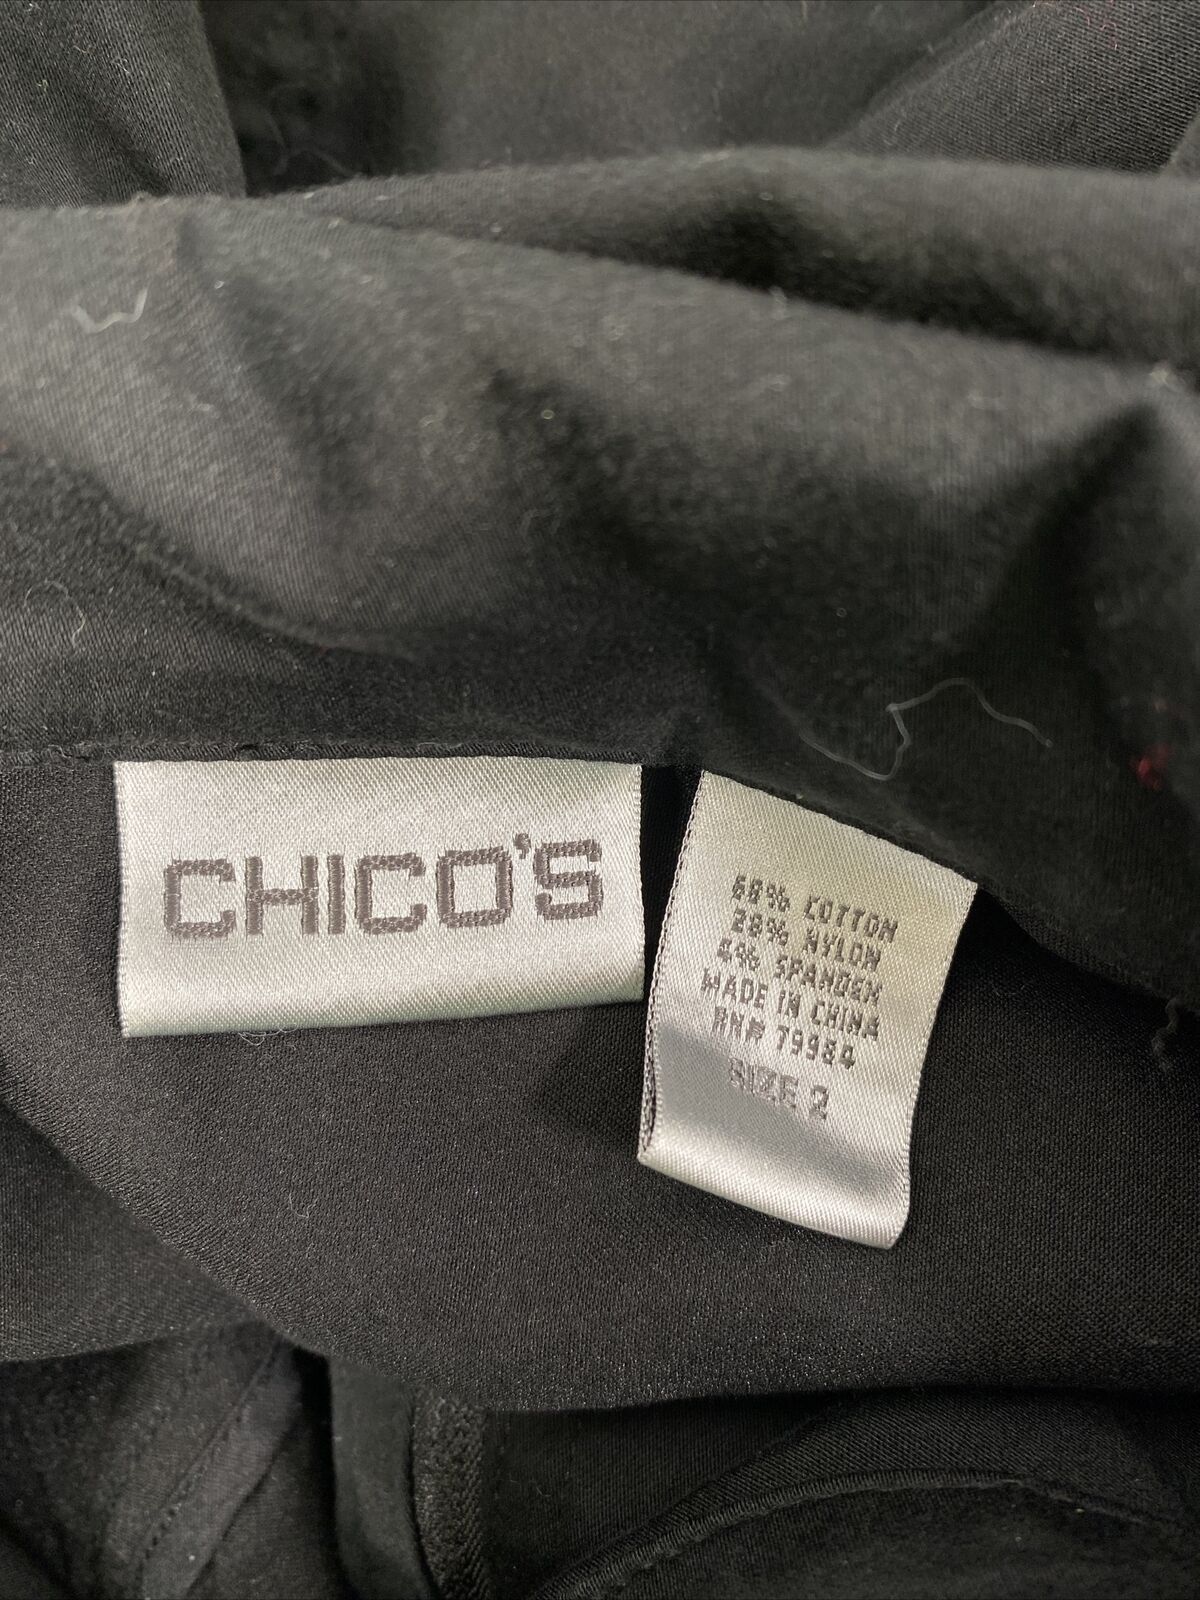 Chico's Chaqueta básica negra de manga larga con cremallera completa para mujer - 2 US L